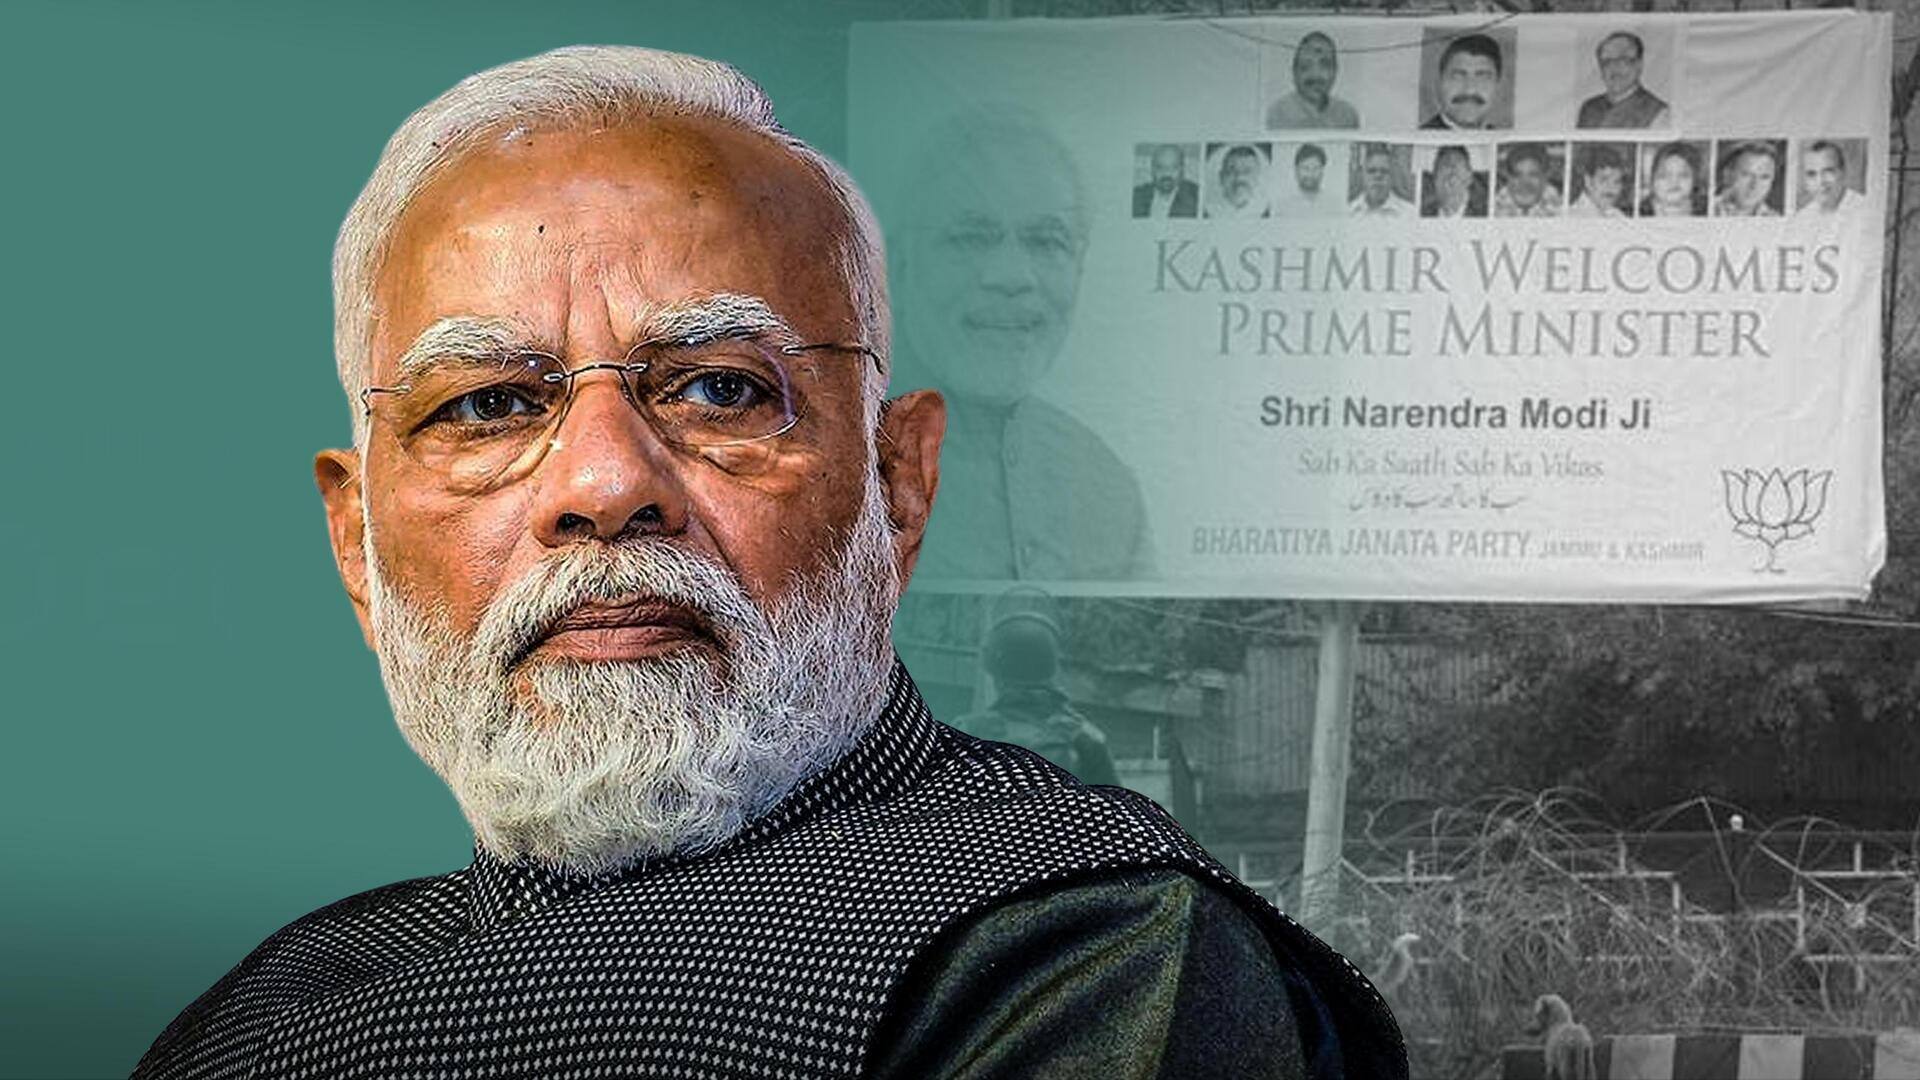 Congress was 'misguiding' Kashmir over Article 370: Modi in Srinagar